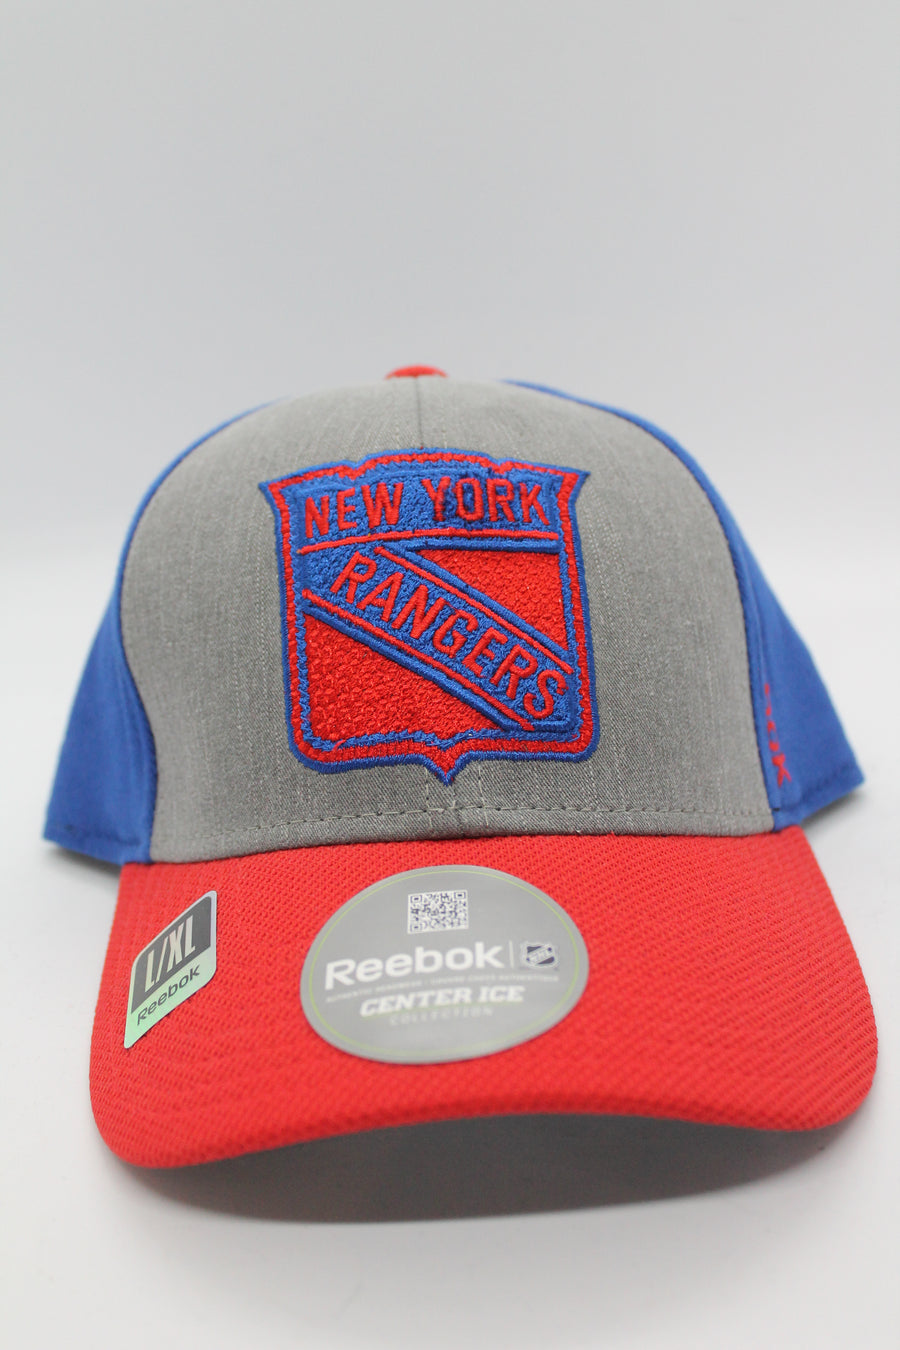 NHL New York Rangers Reebok Center Ice Stretch Fit Hat